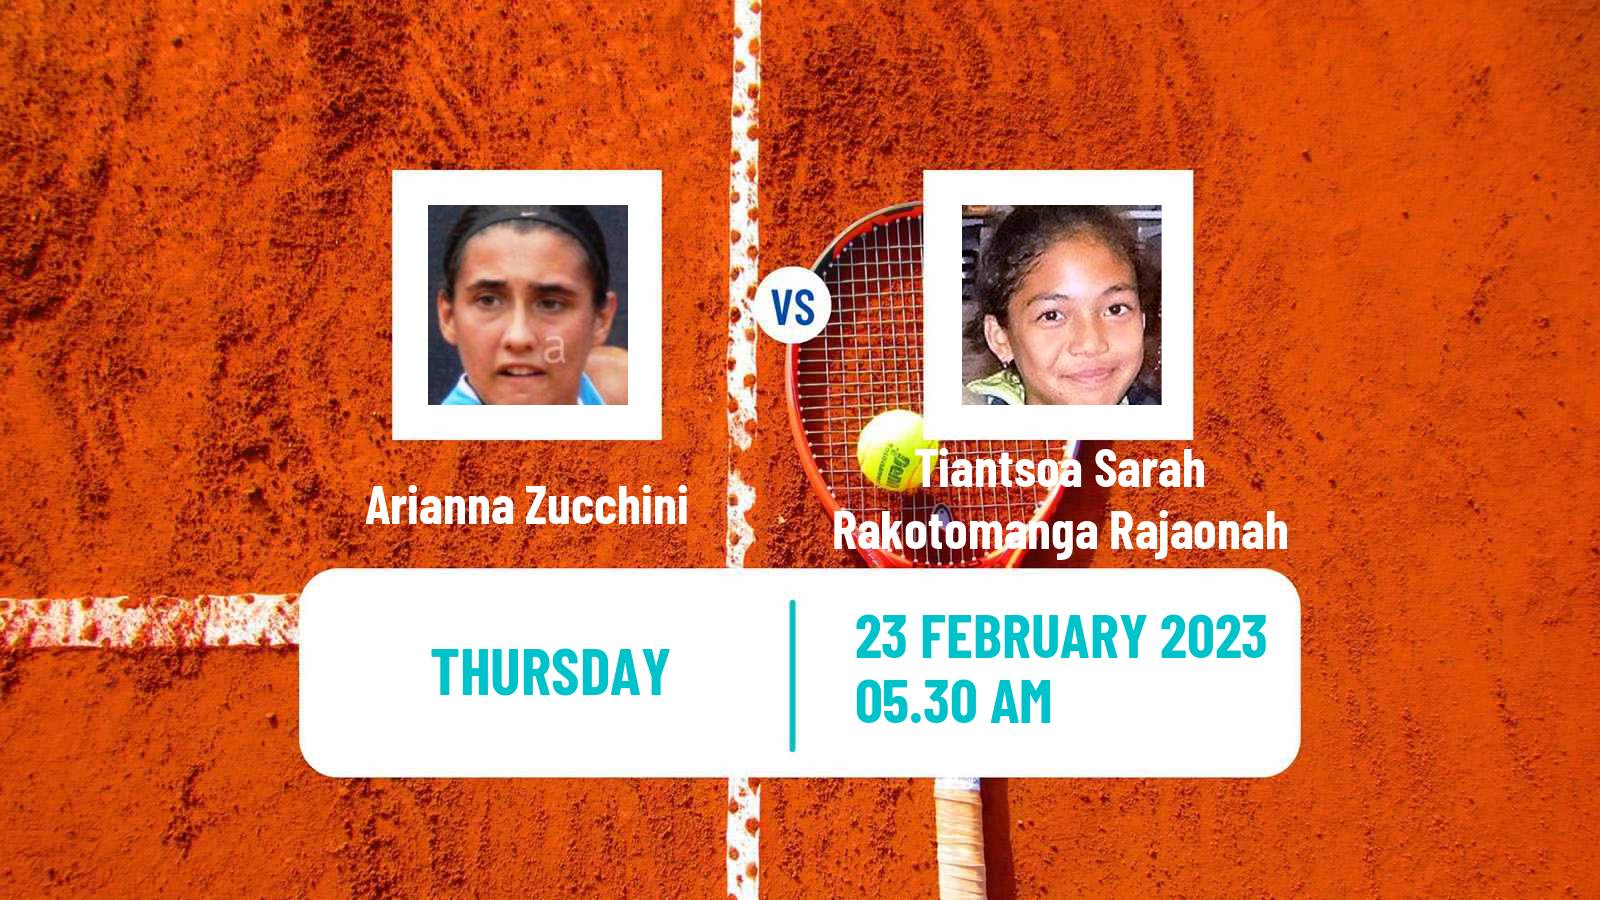 Tennis ITF Tournaments Arianna Zucchini - Tiantsoa Sarah Rakotomanga Rajaonah